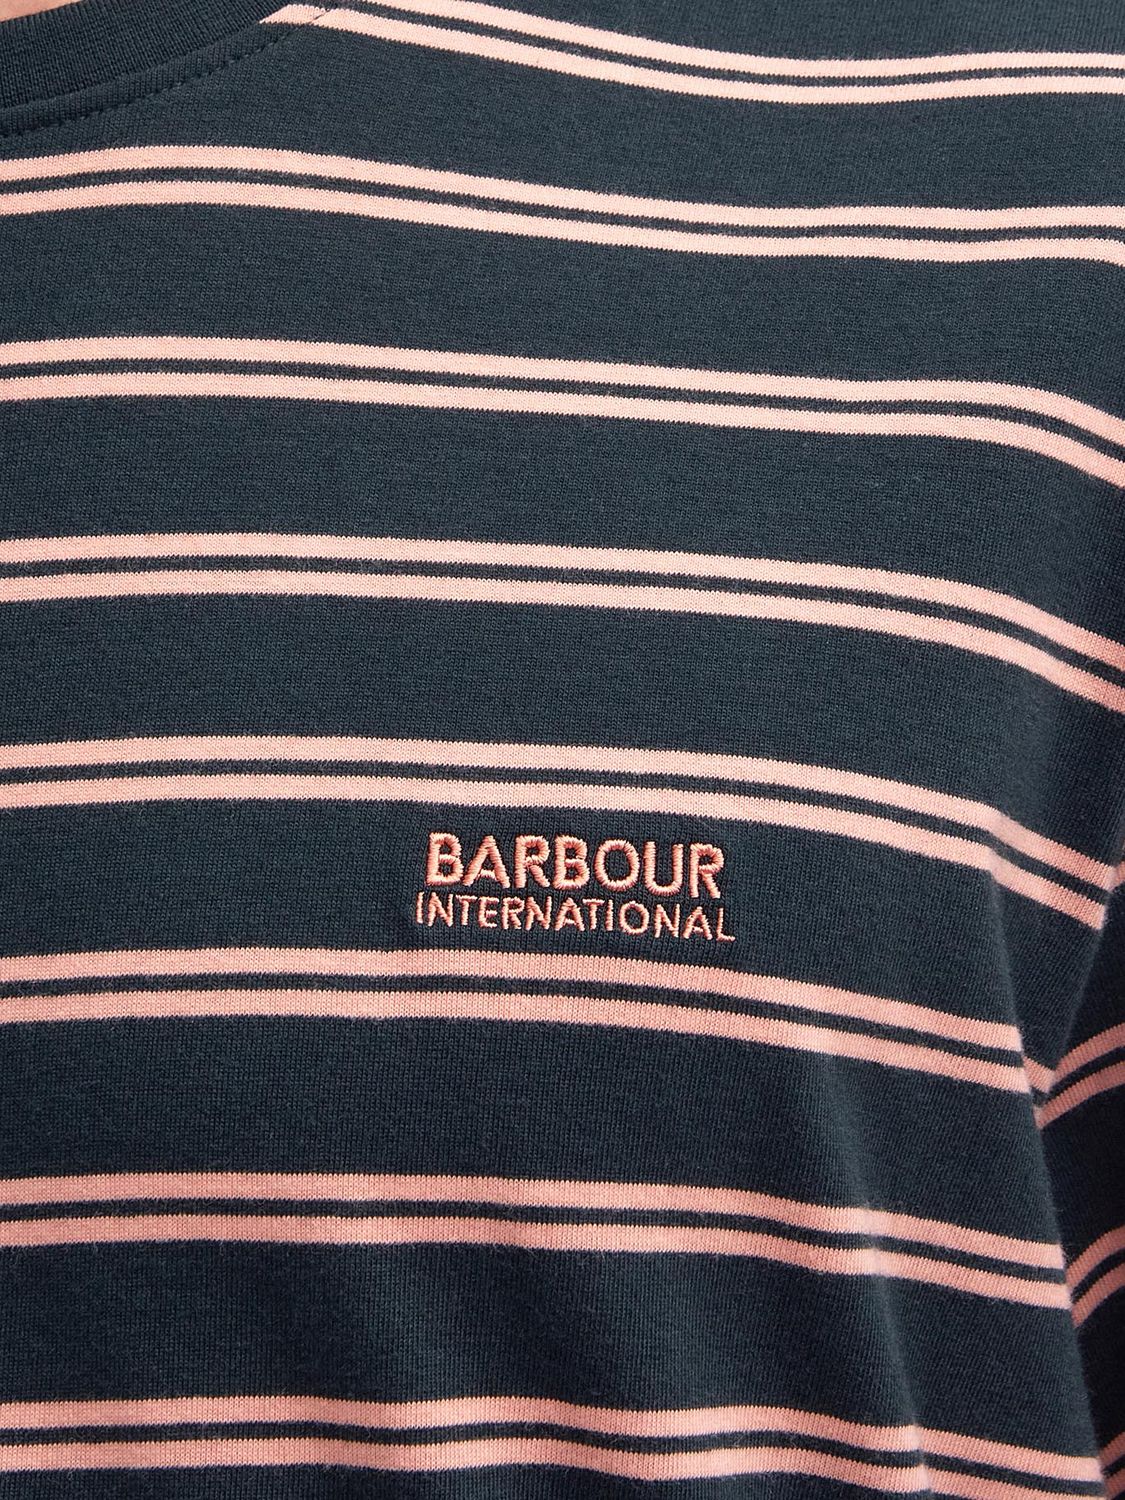 Barbour International Bernie Stripe T-Shirt, Forest River, XL